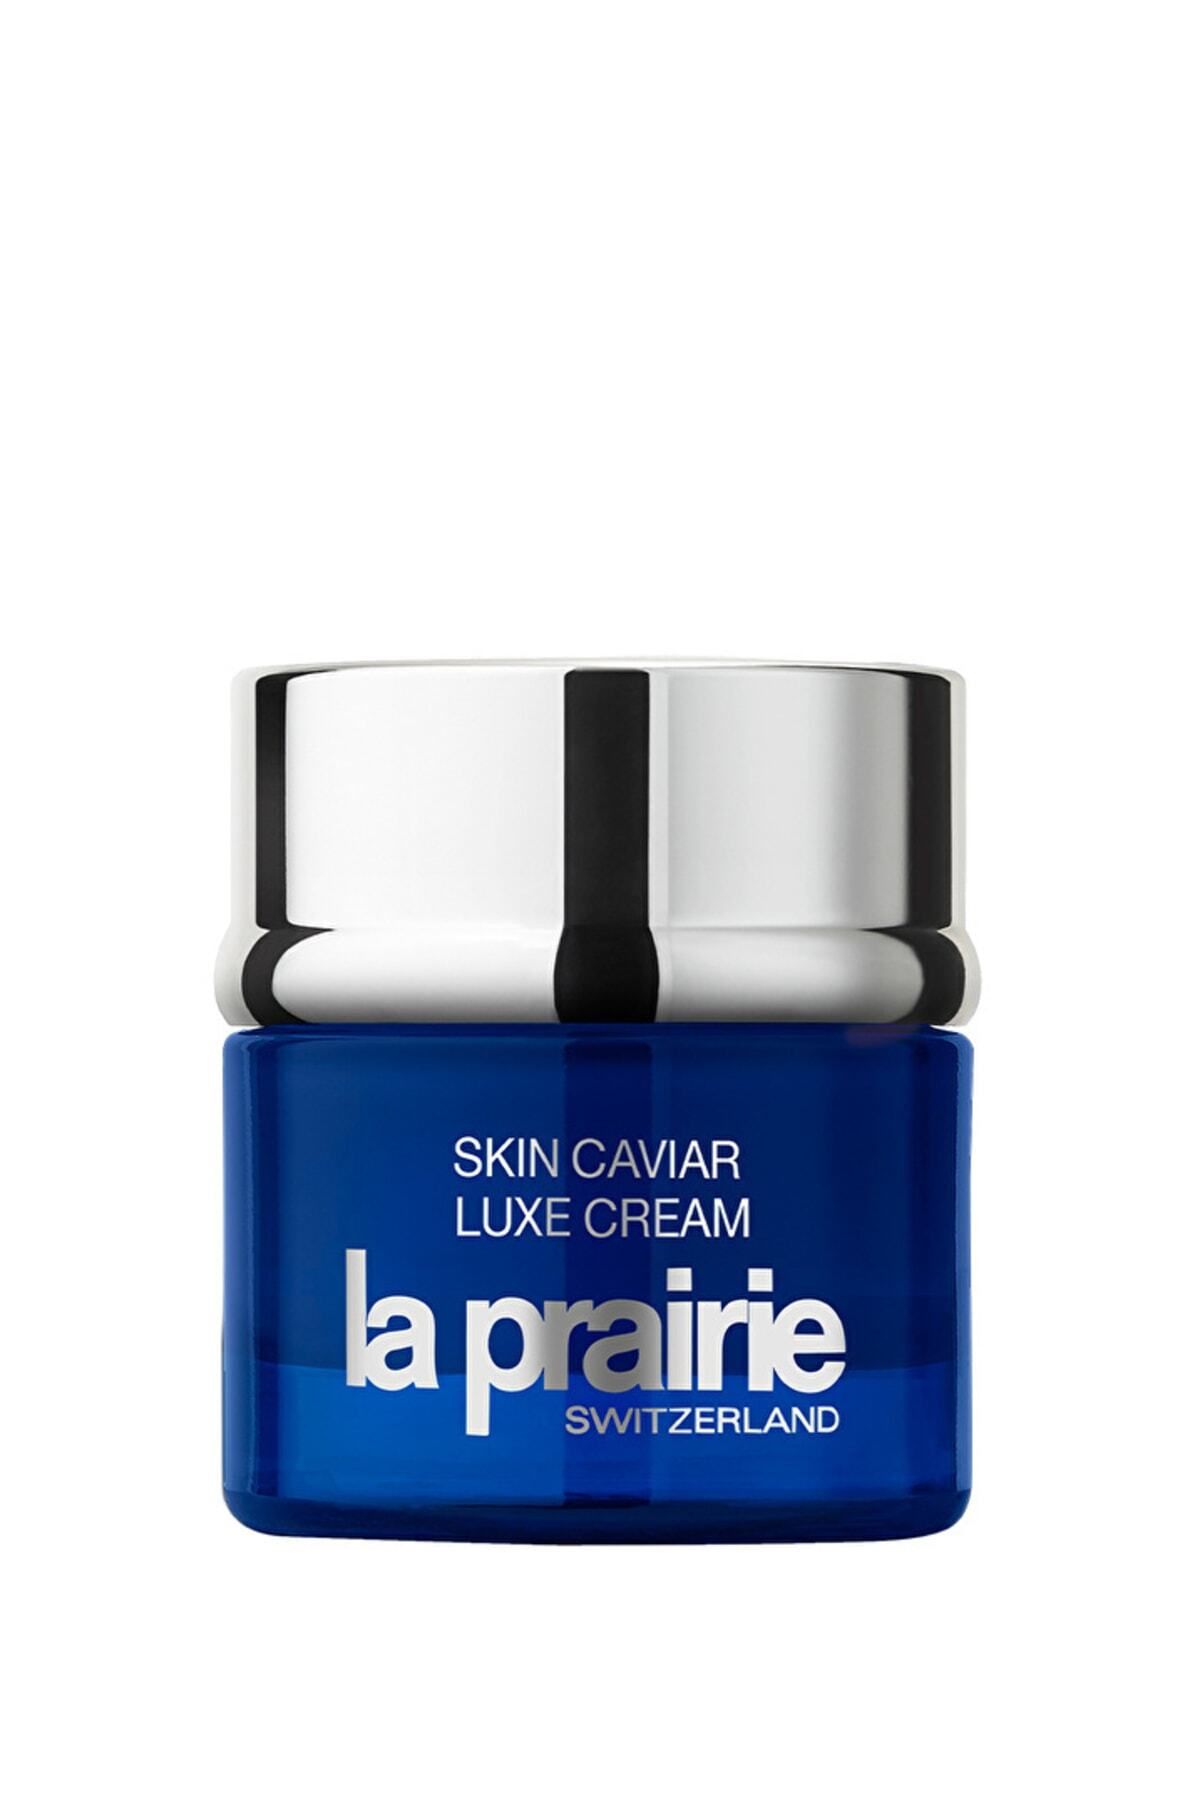 La Prairie Skin Caviar Luxe Cream 50ml Renewal147